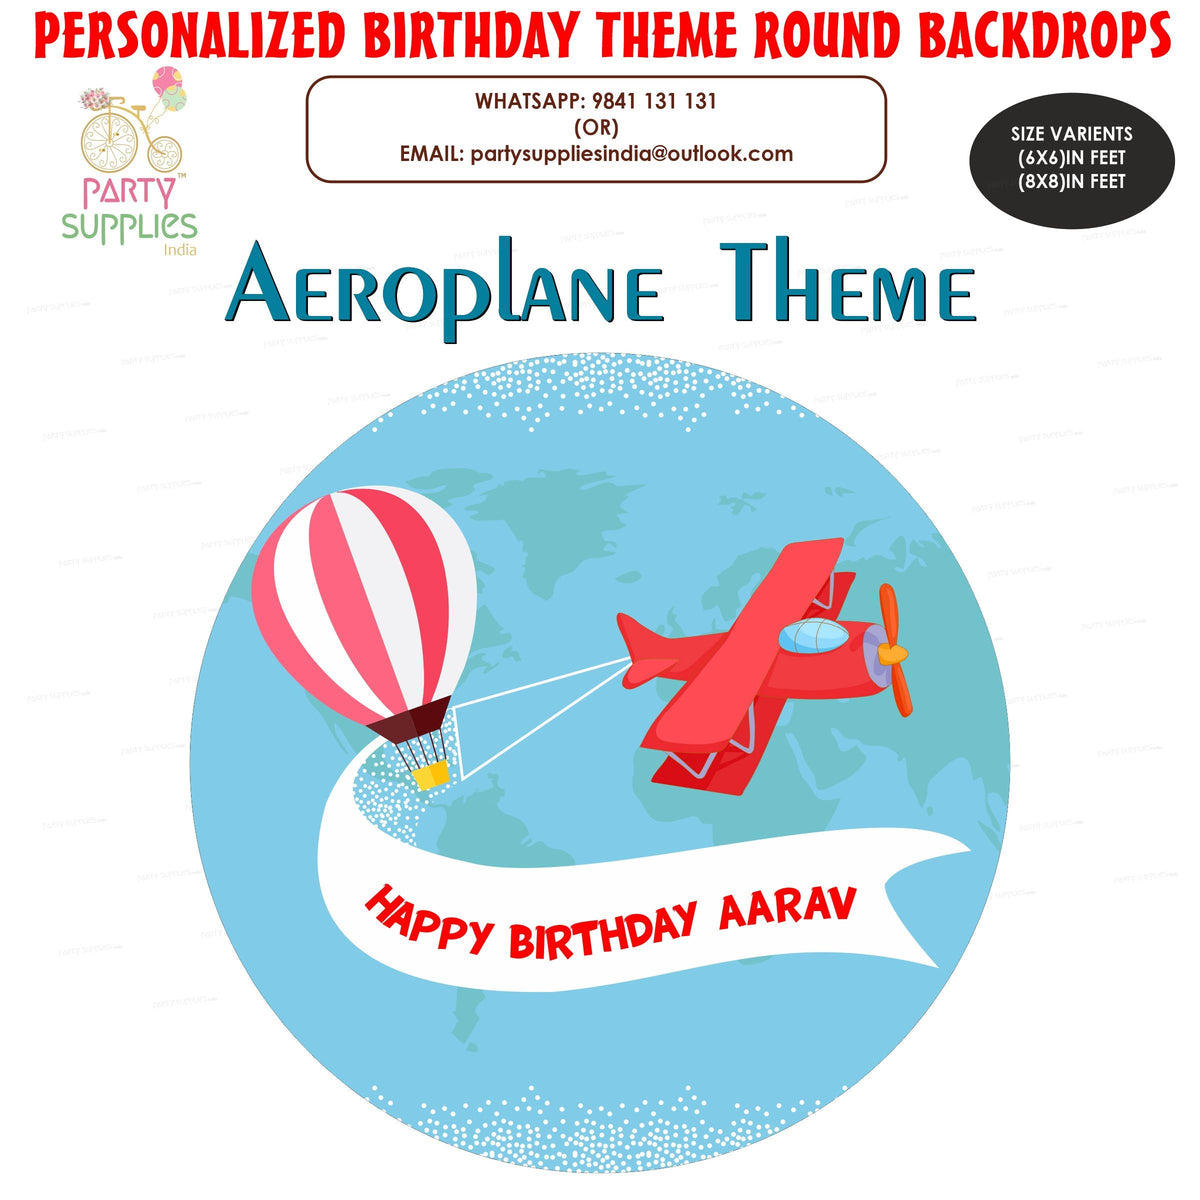 PSI Aeroplane Theme Customized Round  Backdrop